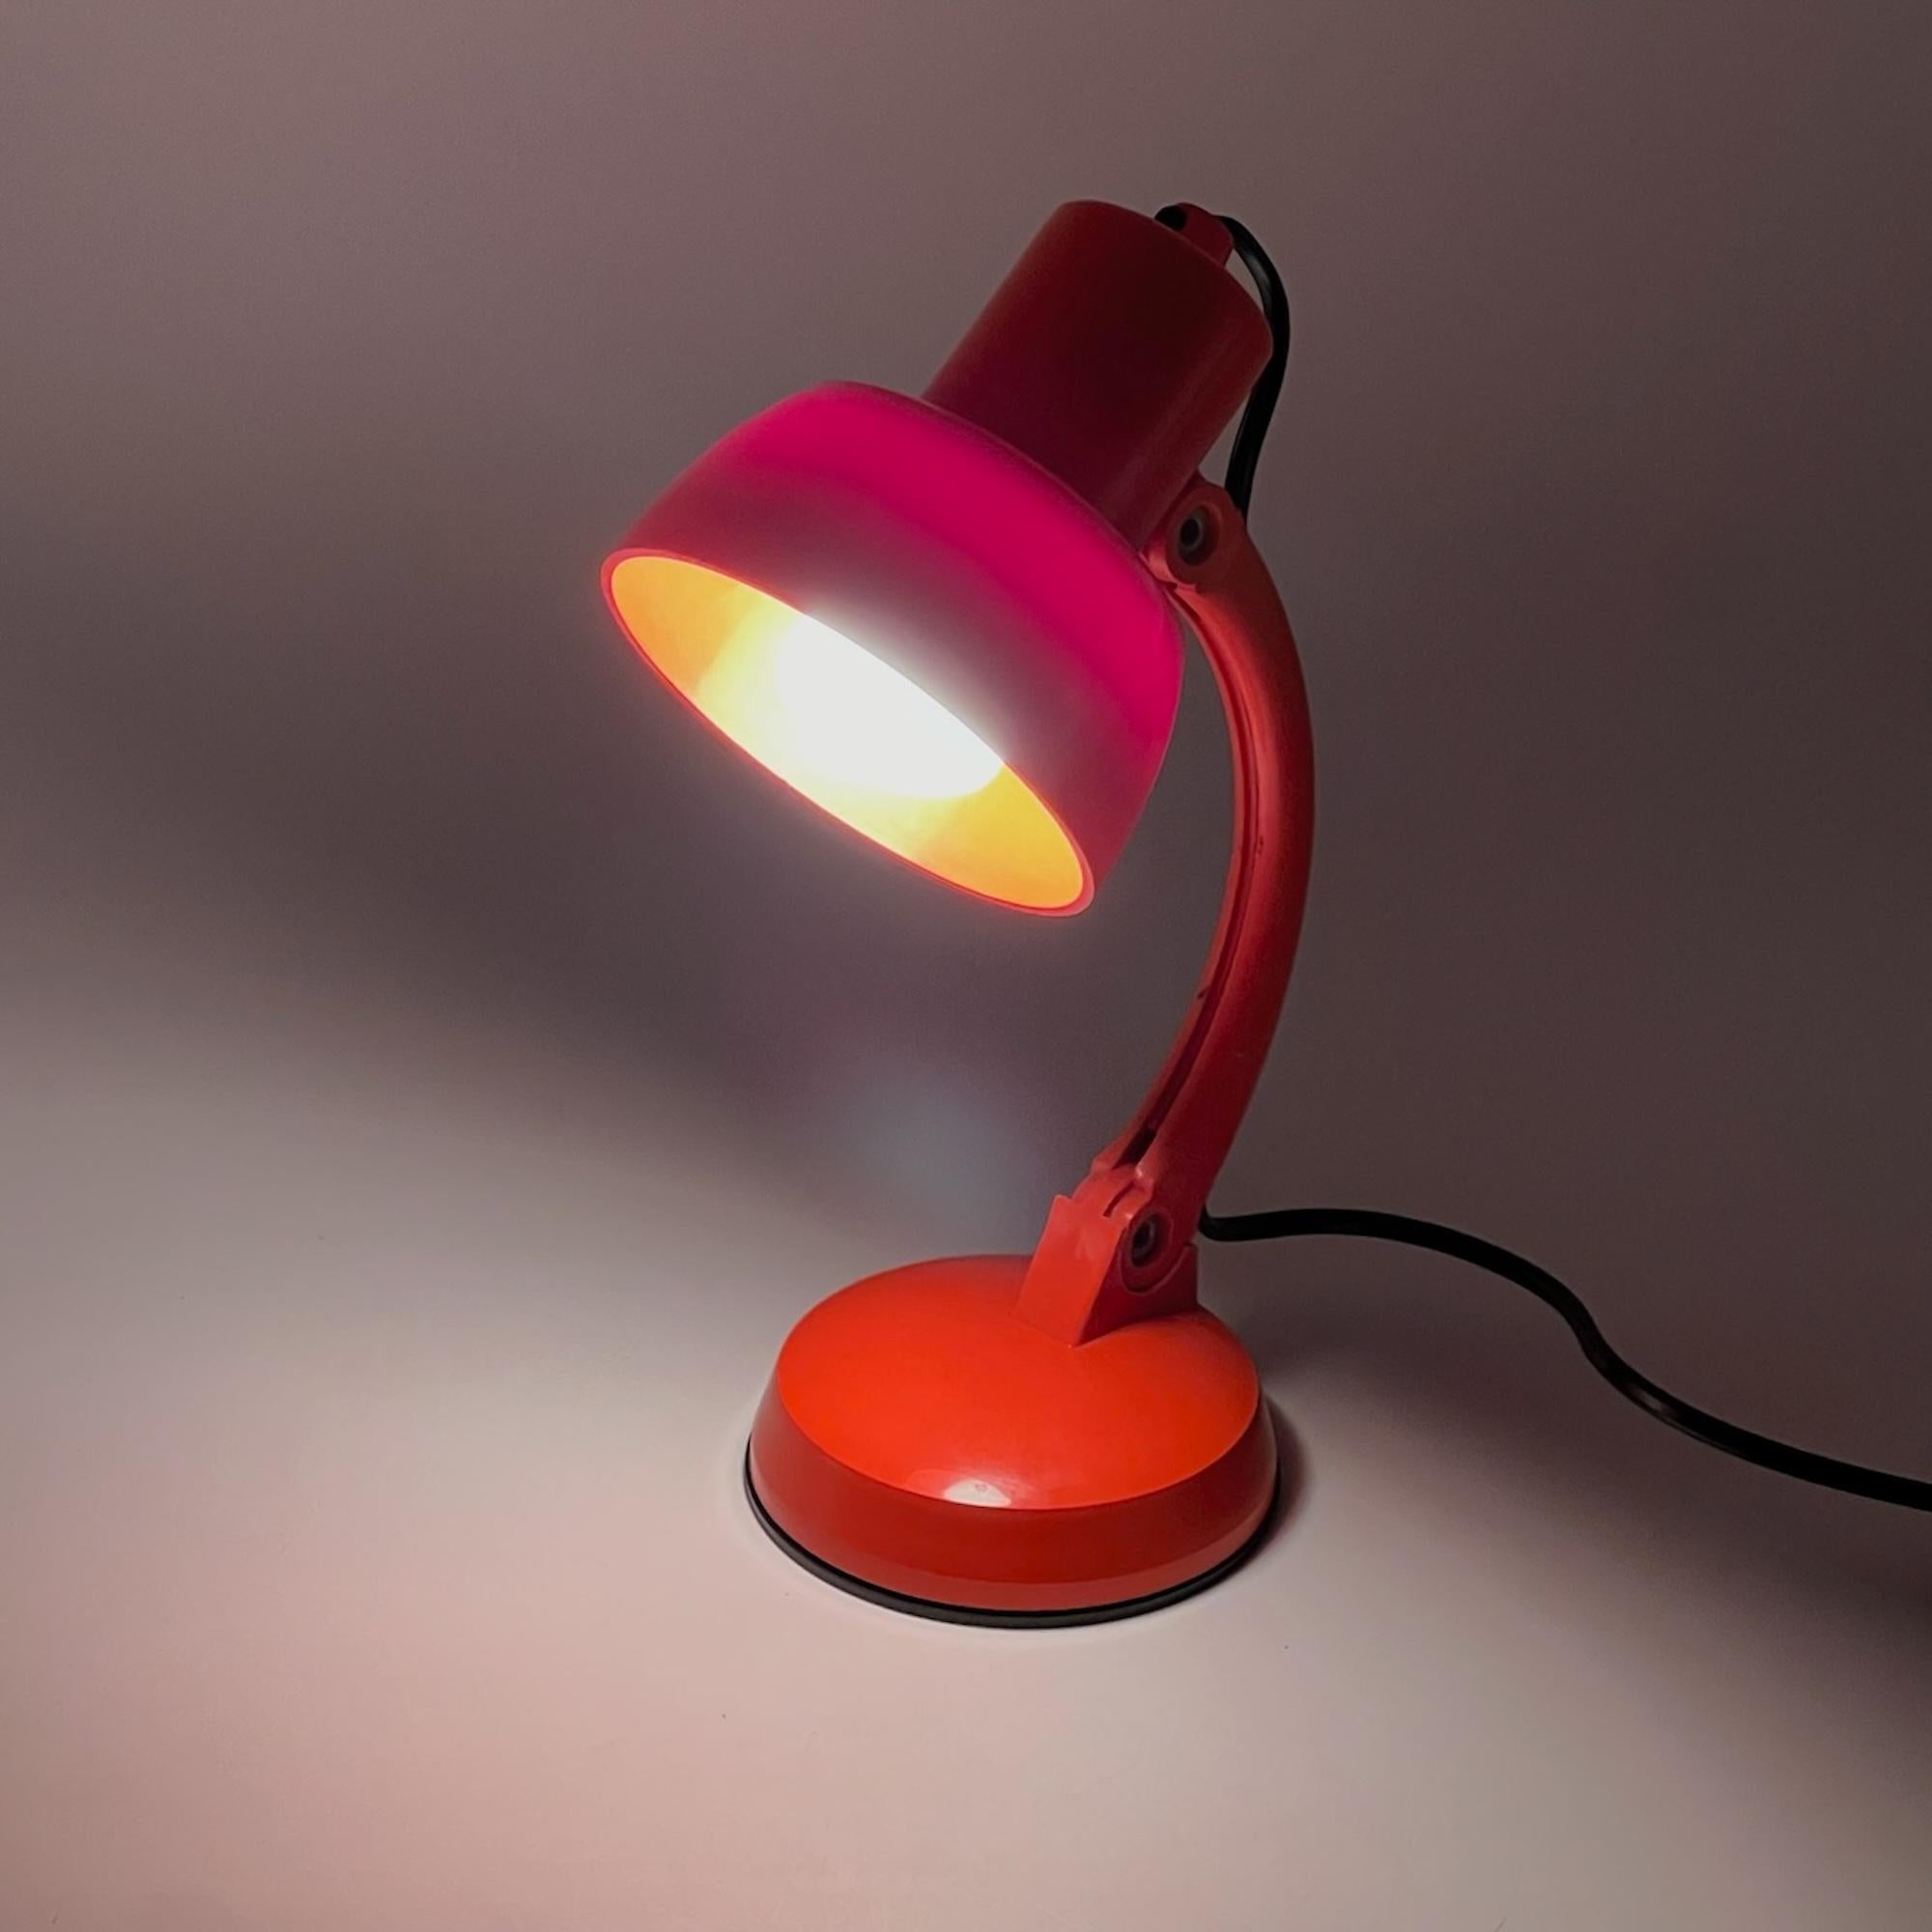 Space Age Orange Futuristic Desk Lamp with Gooseneck Stem, 1970s  4